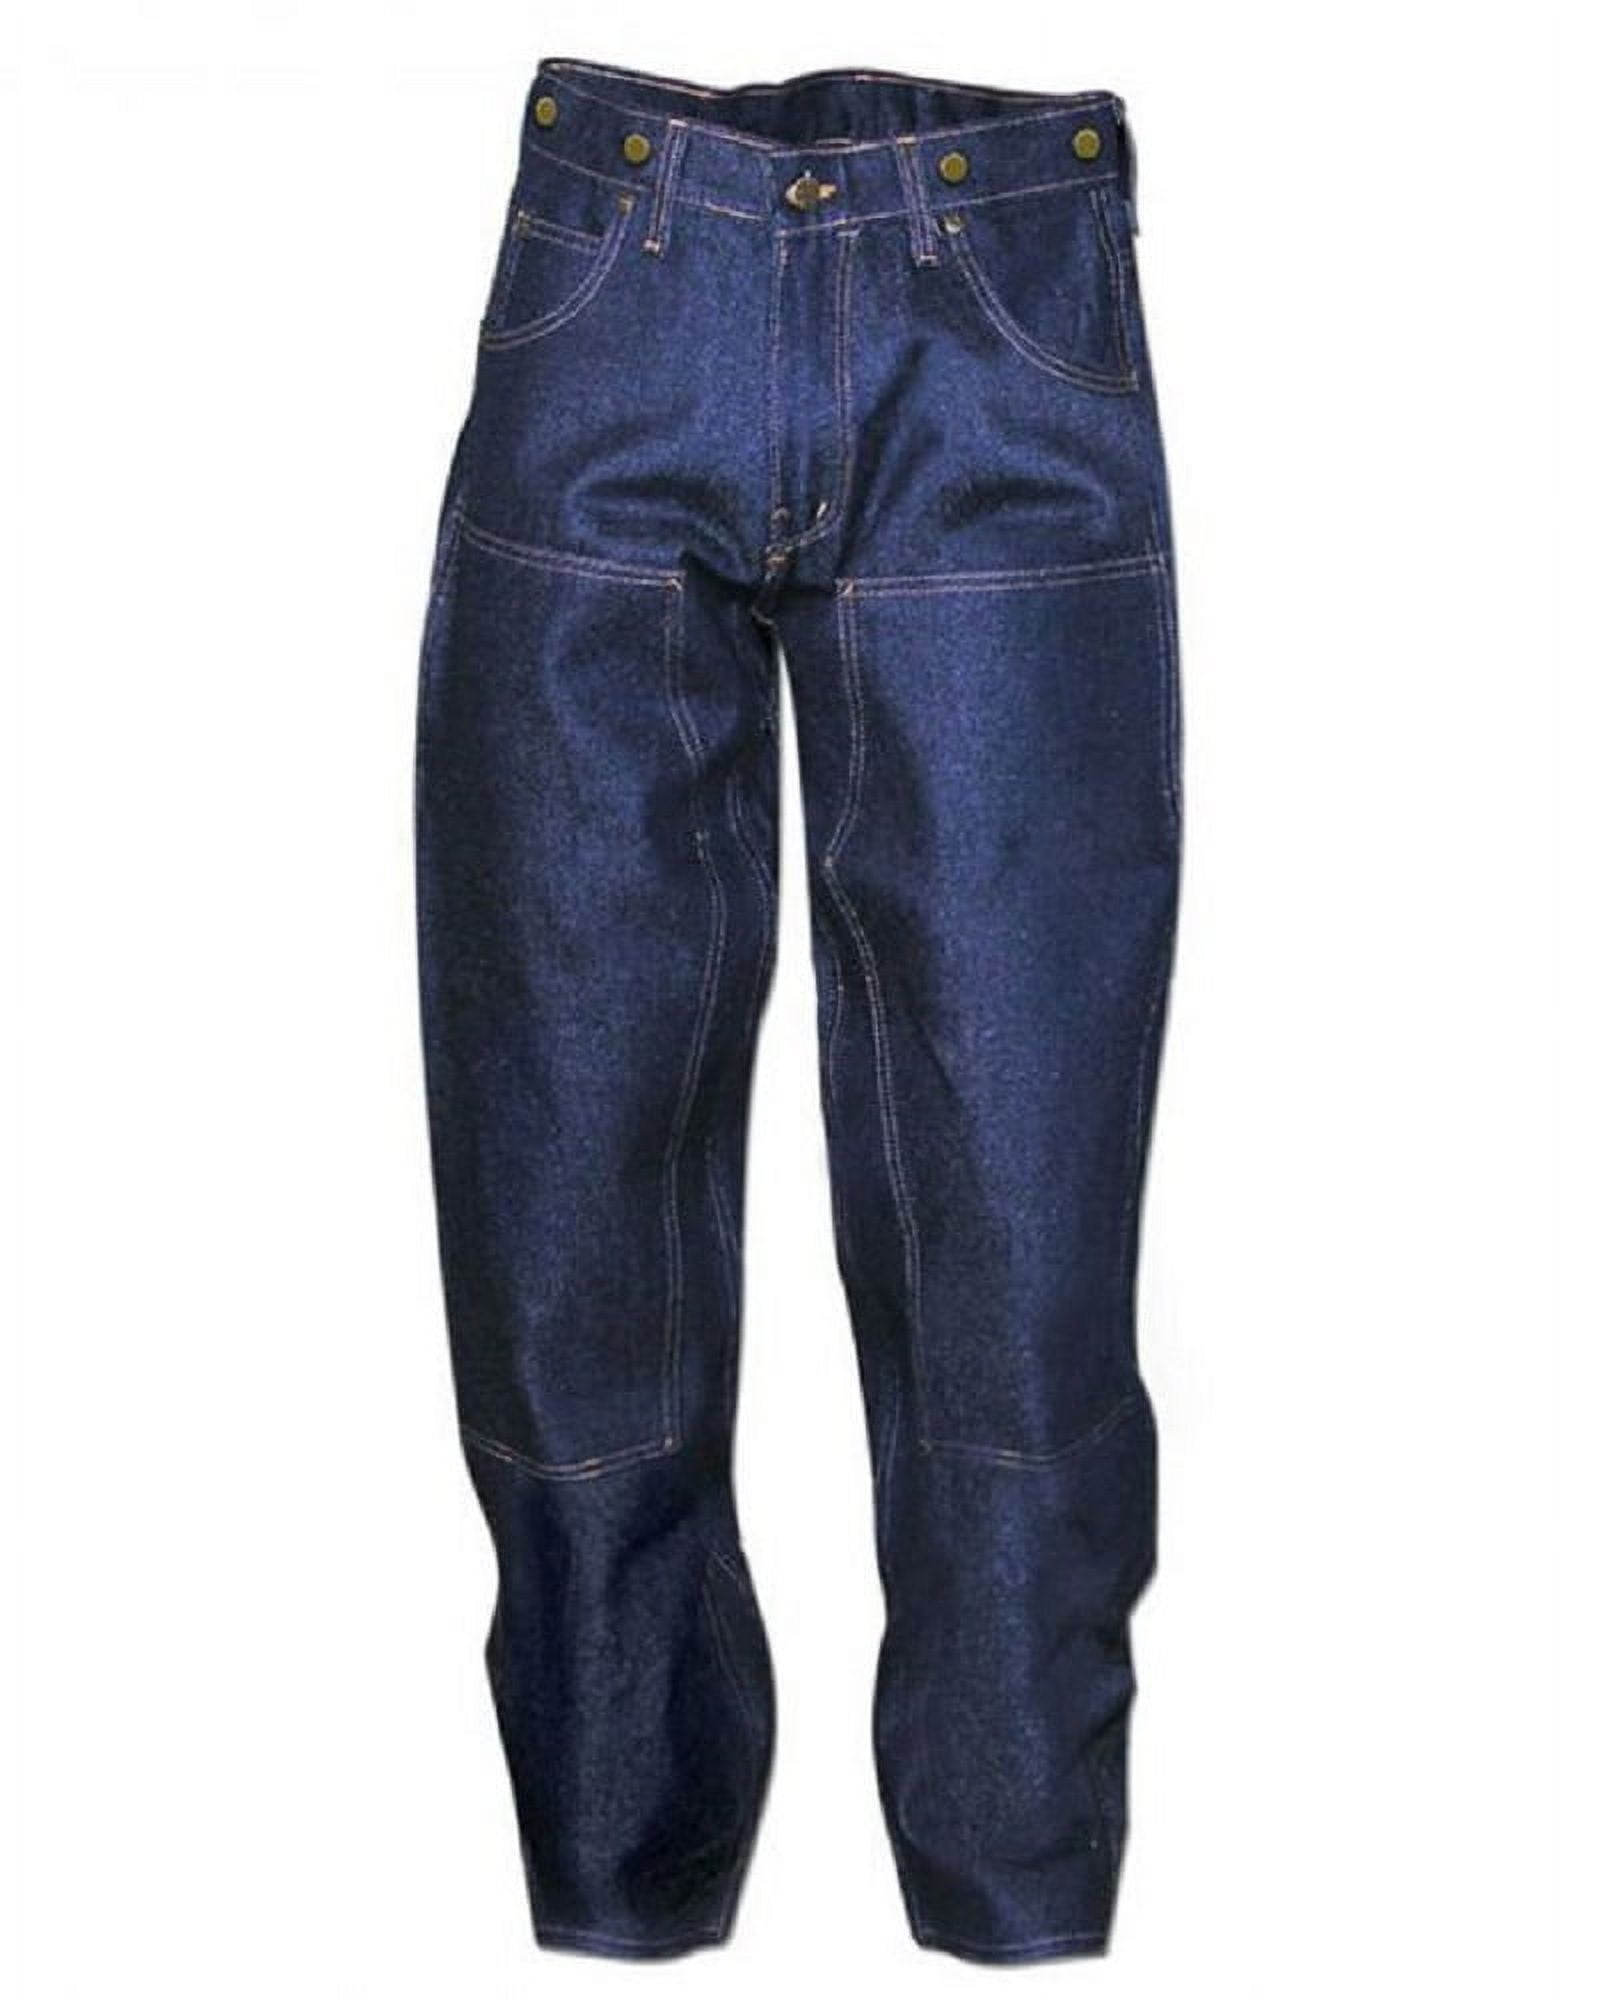 Prison Blues Double Knee Rigid Work Jeans - 38 x 32 - Walmart.com